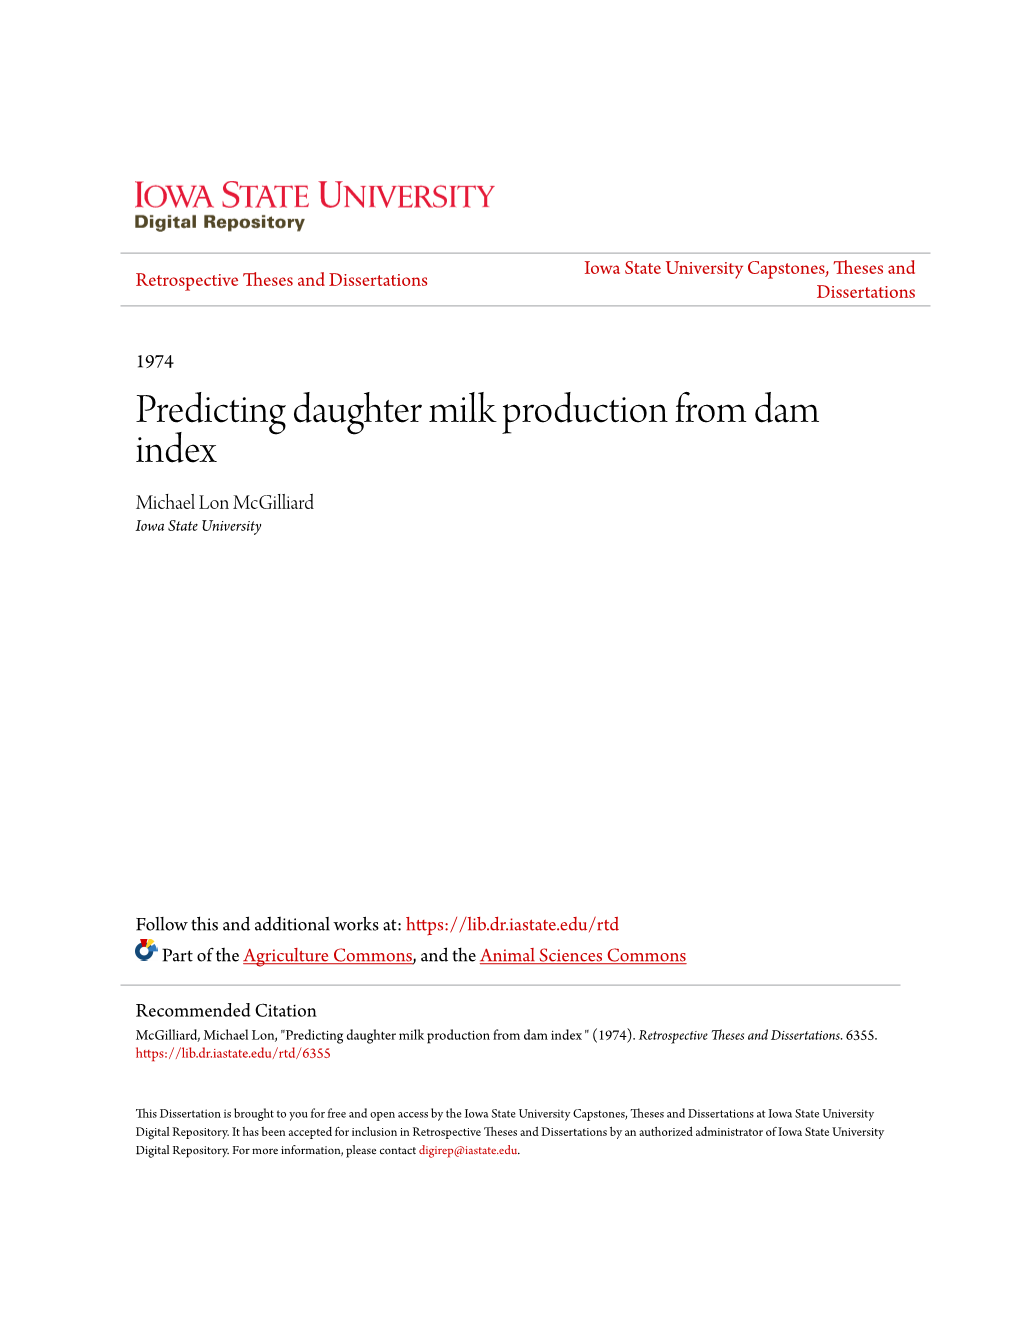 Predicting Daughter Milk Production from Dam Index Michael Lon Mcgilliard Iowa State University